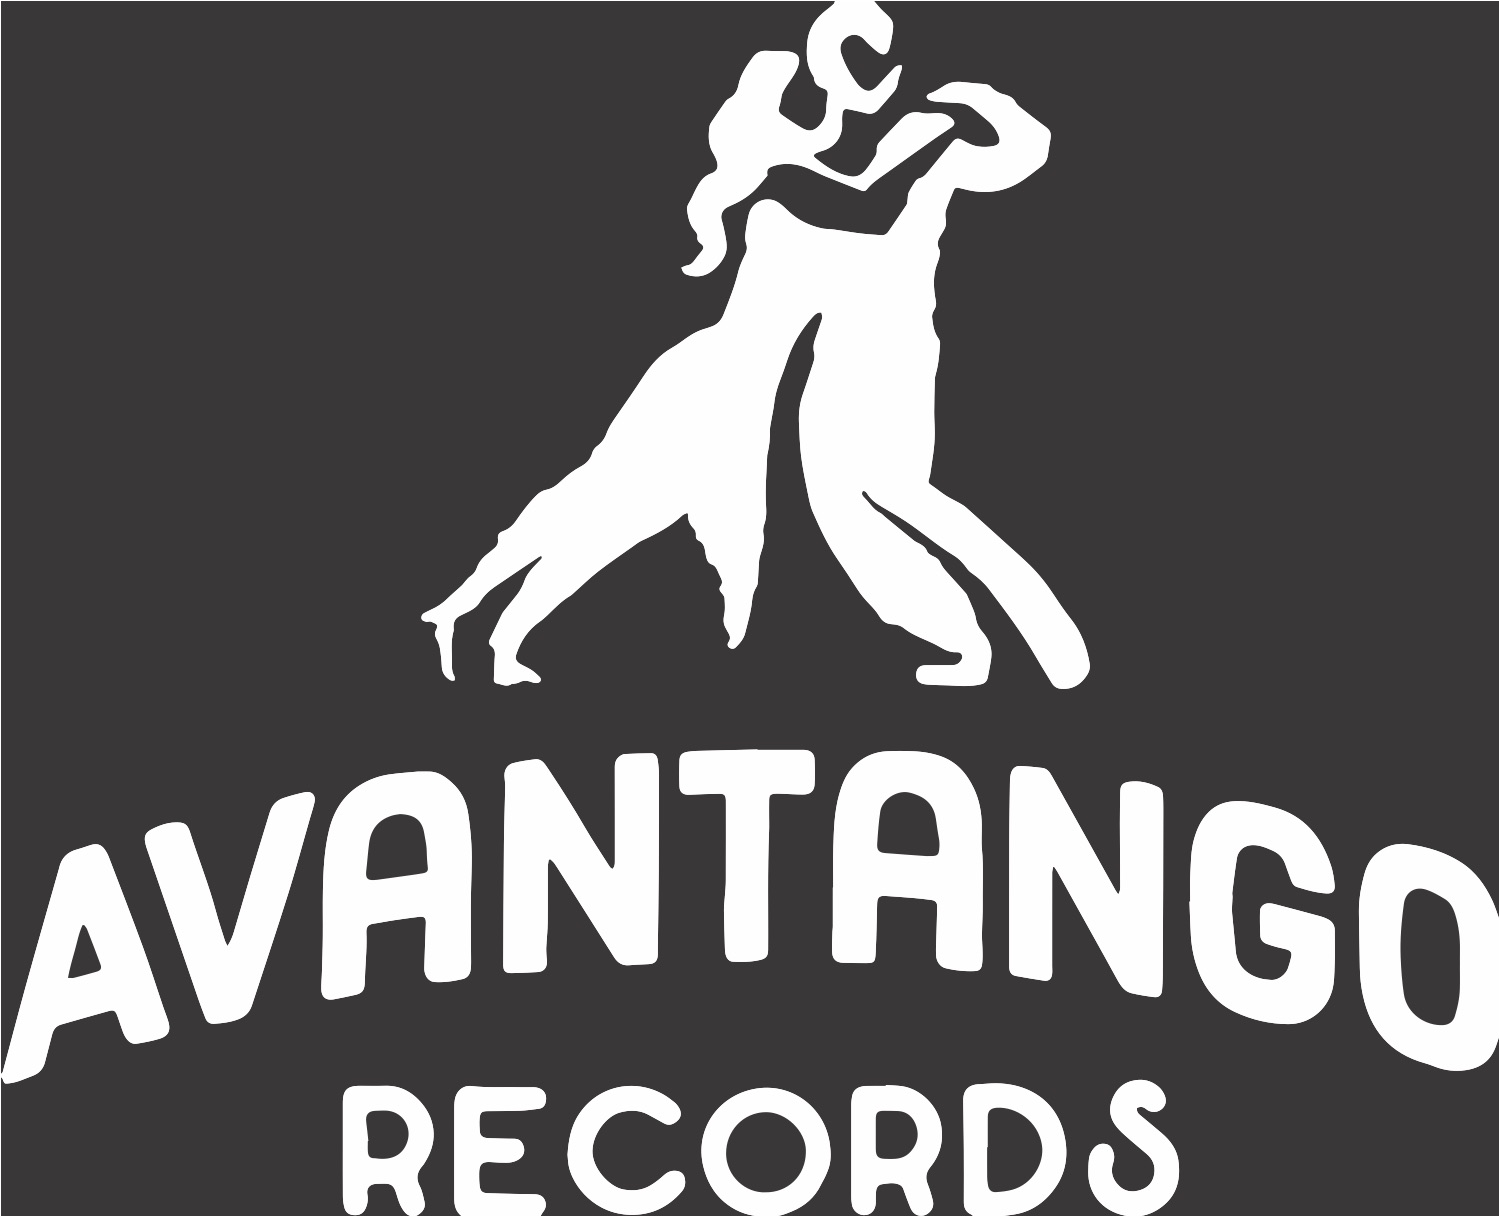 Avantango Records